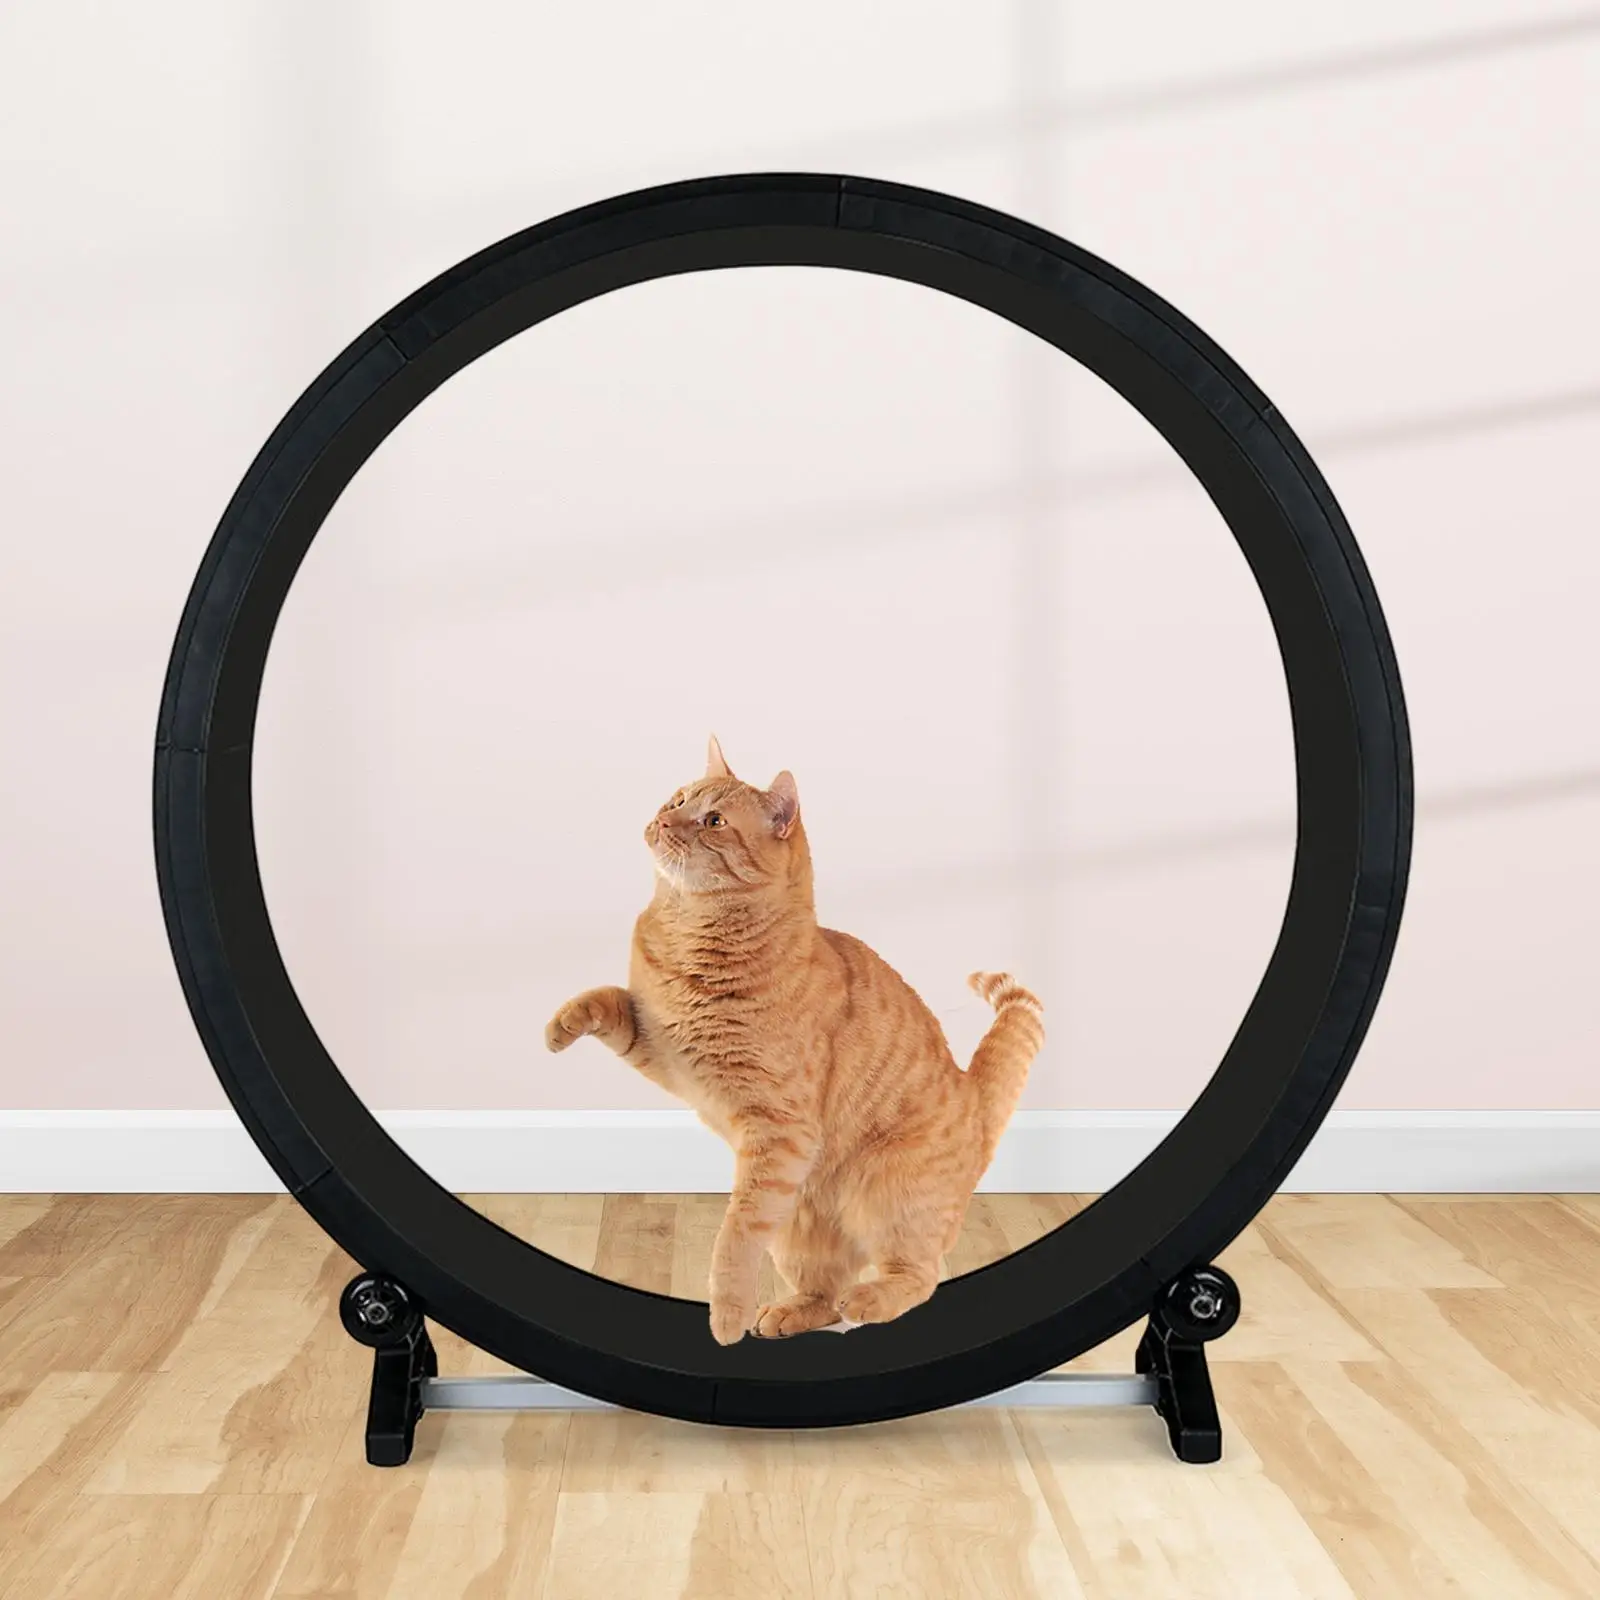 

Pet Cat Running Wheel Silent Exerciser Climbing Frame Kitten Toys Exercise Wheel Indoor Treadmill for Pet Supplies Workout Game